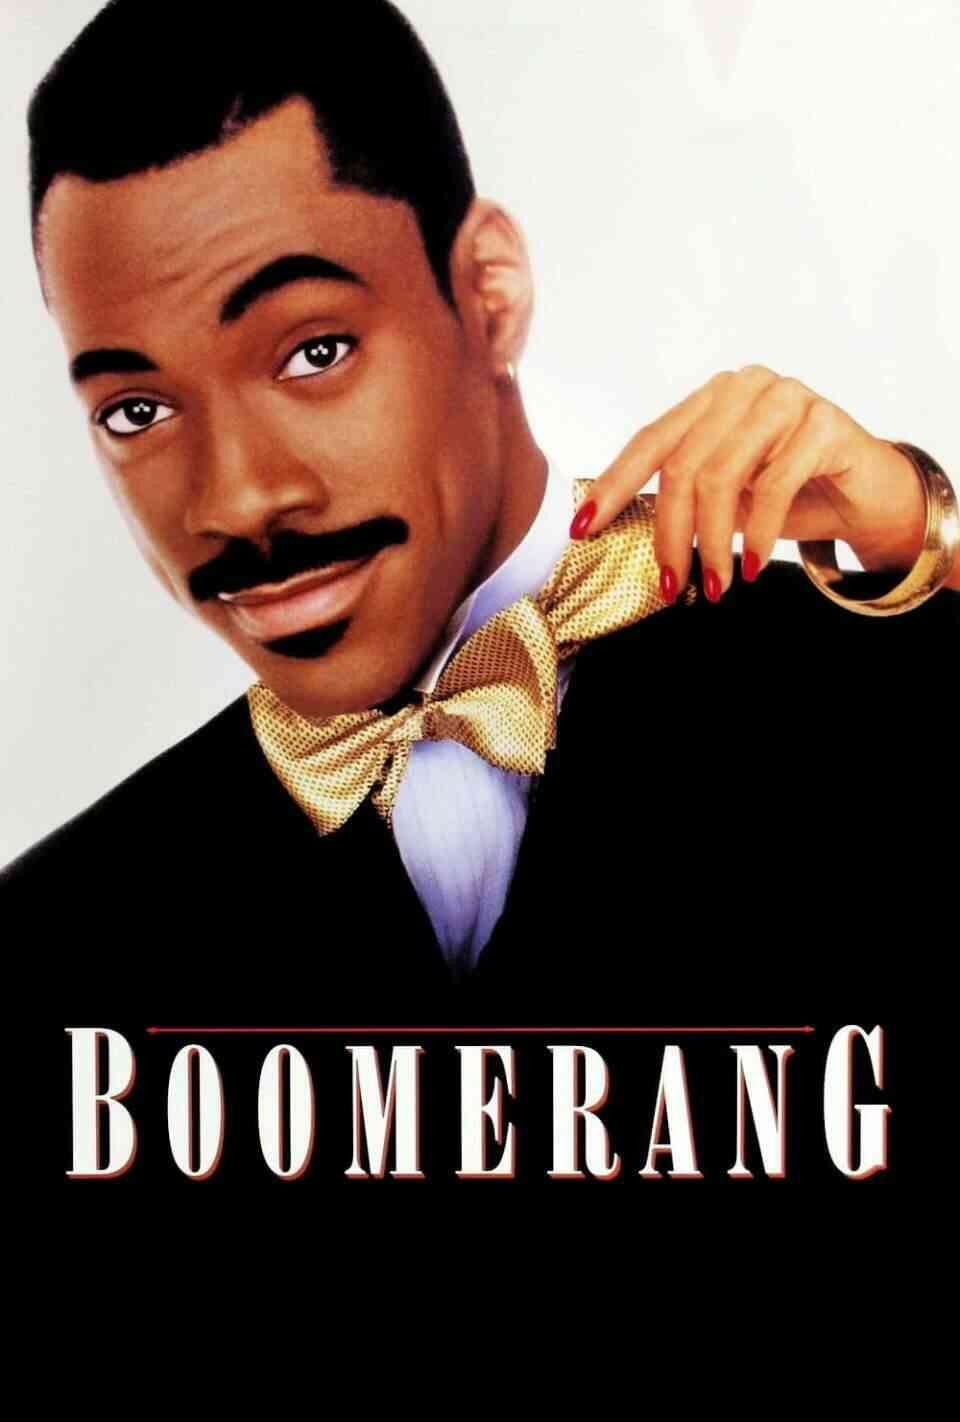 Read Boomerang screenplay (poster)